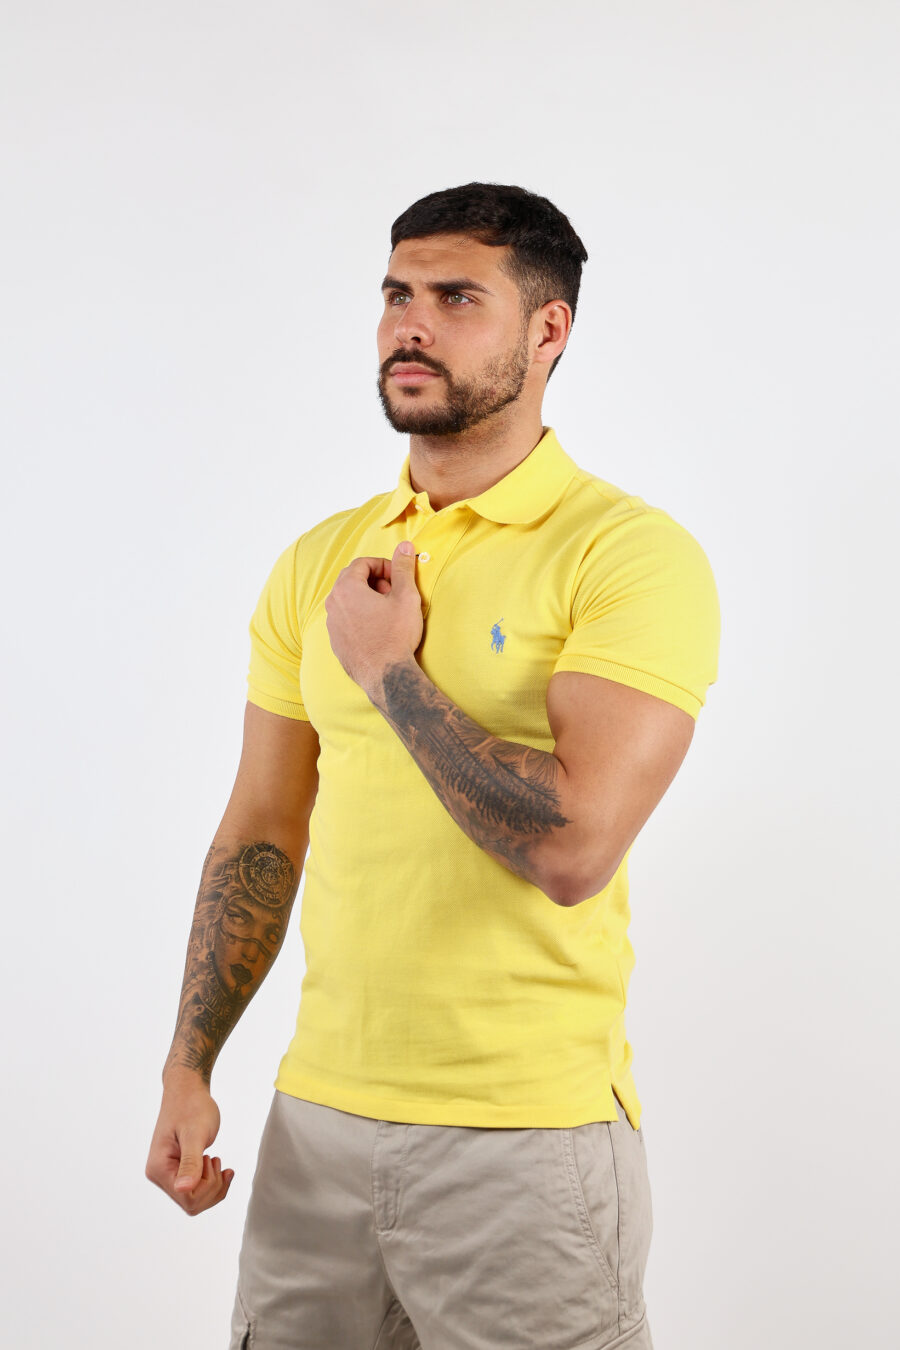 Camiseta amarilla y azul con minilogo "polo" - BLS Fashion 192